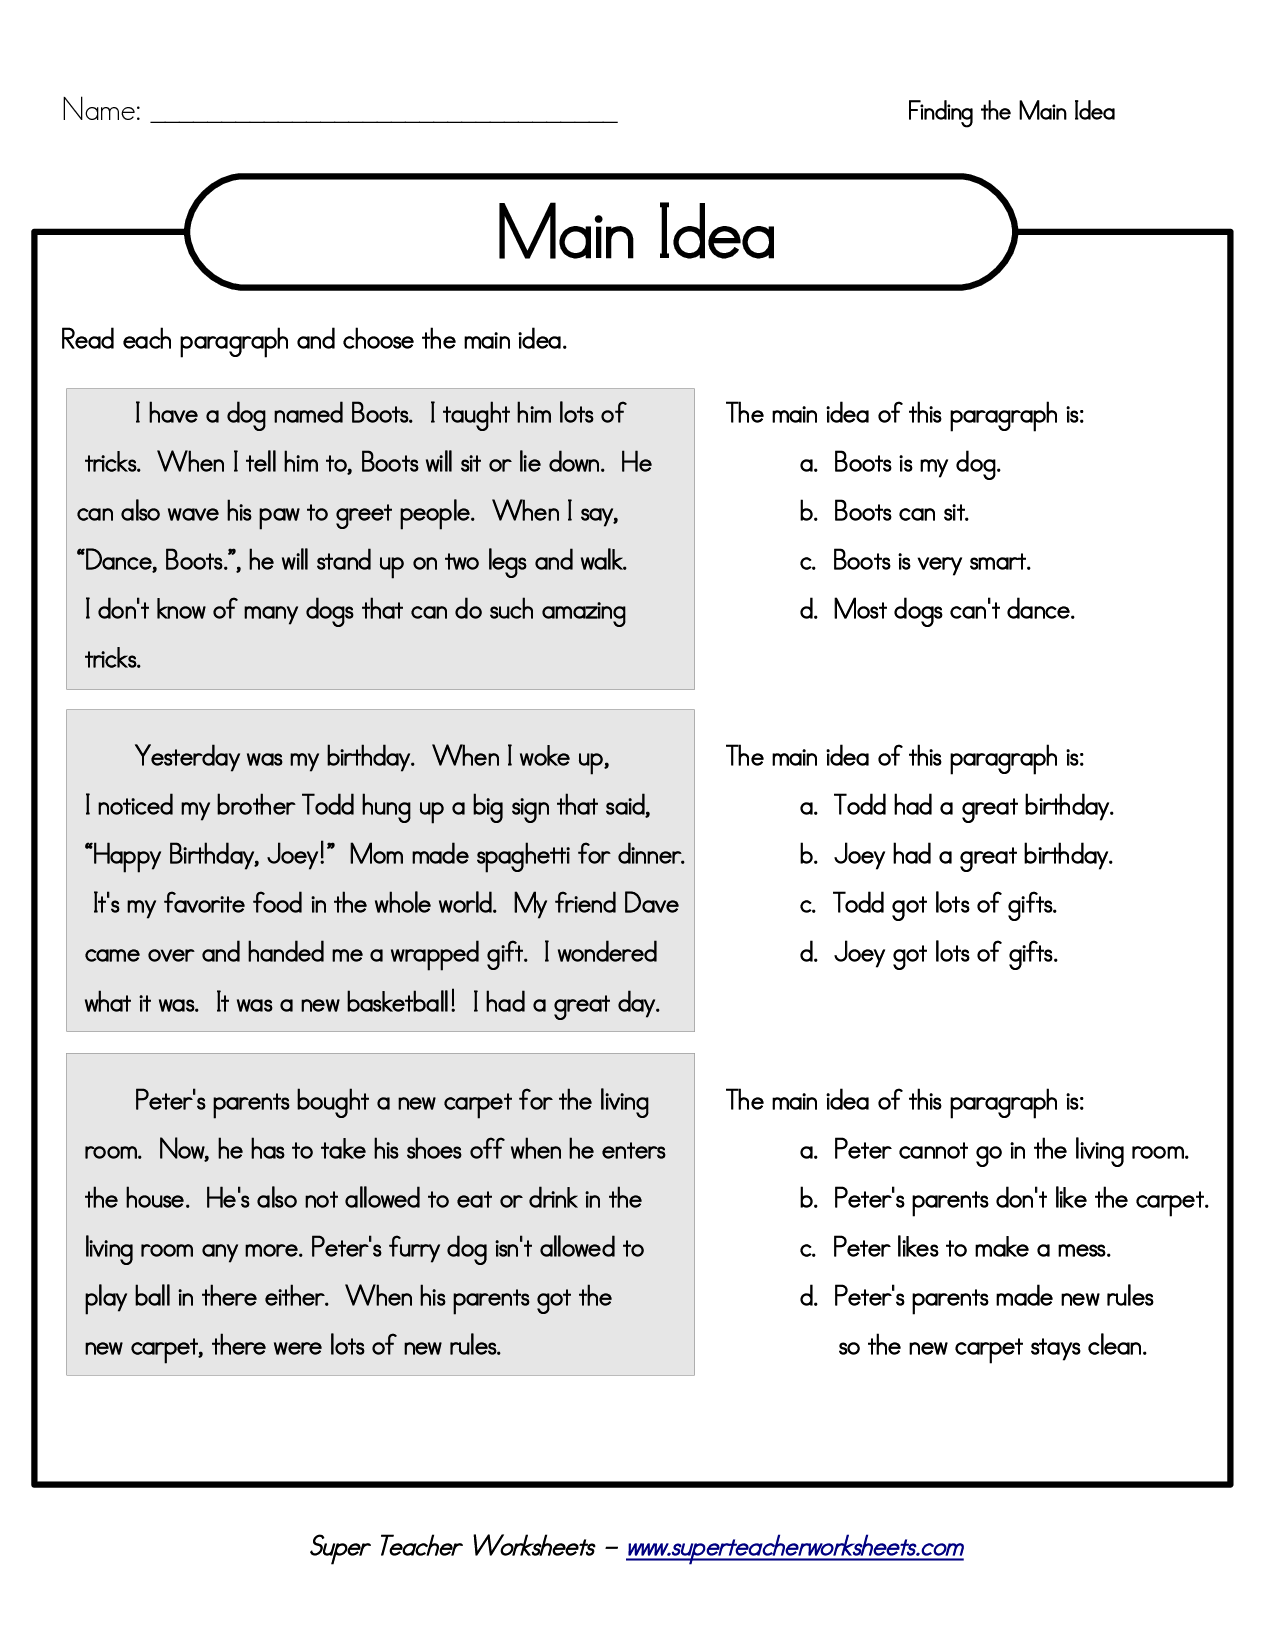 Main Idea Worksheets 3rd Grade Reading Image